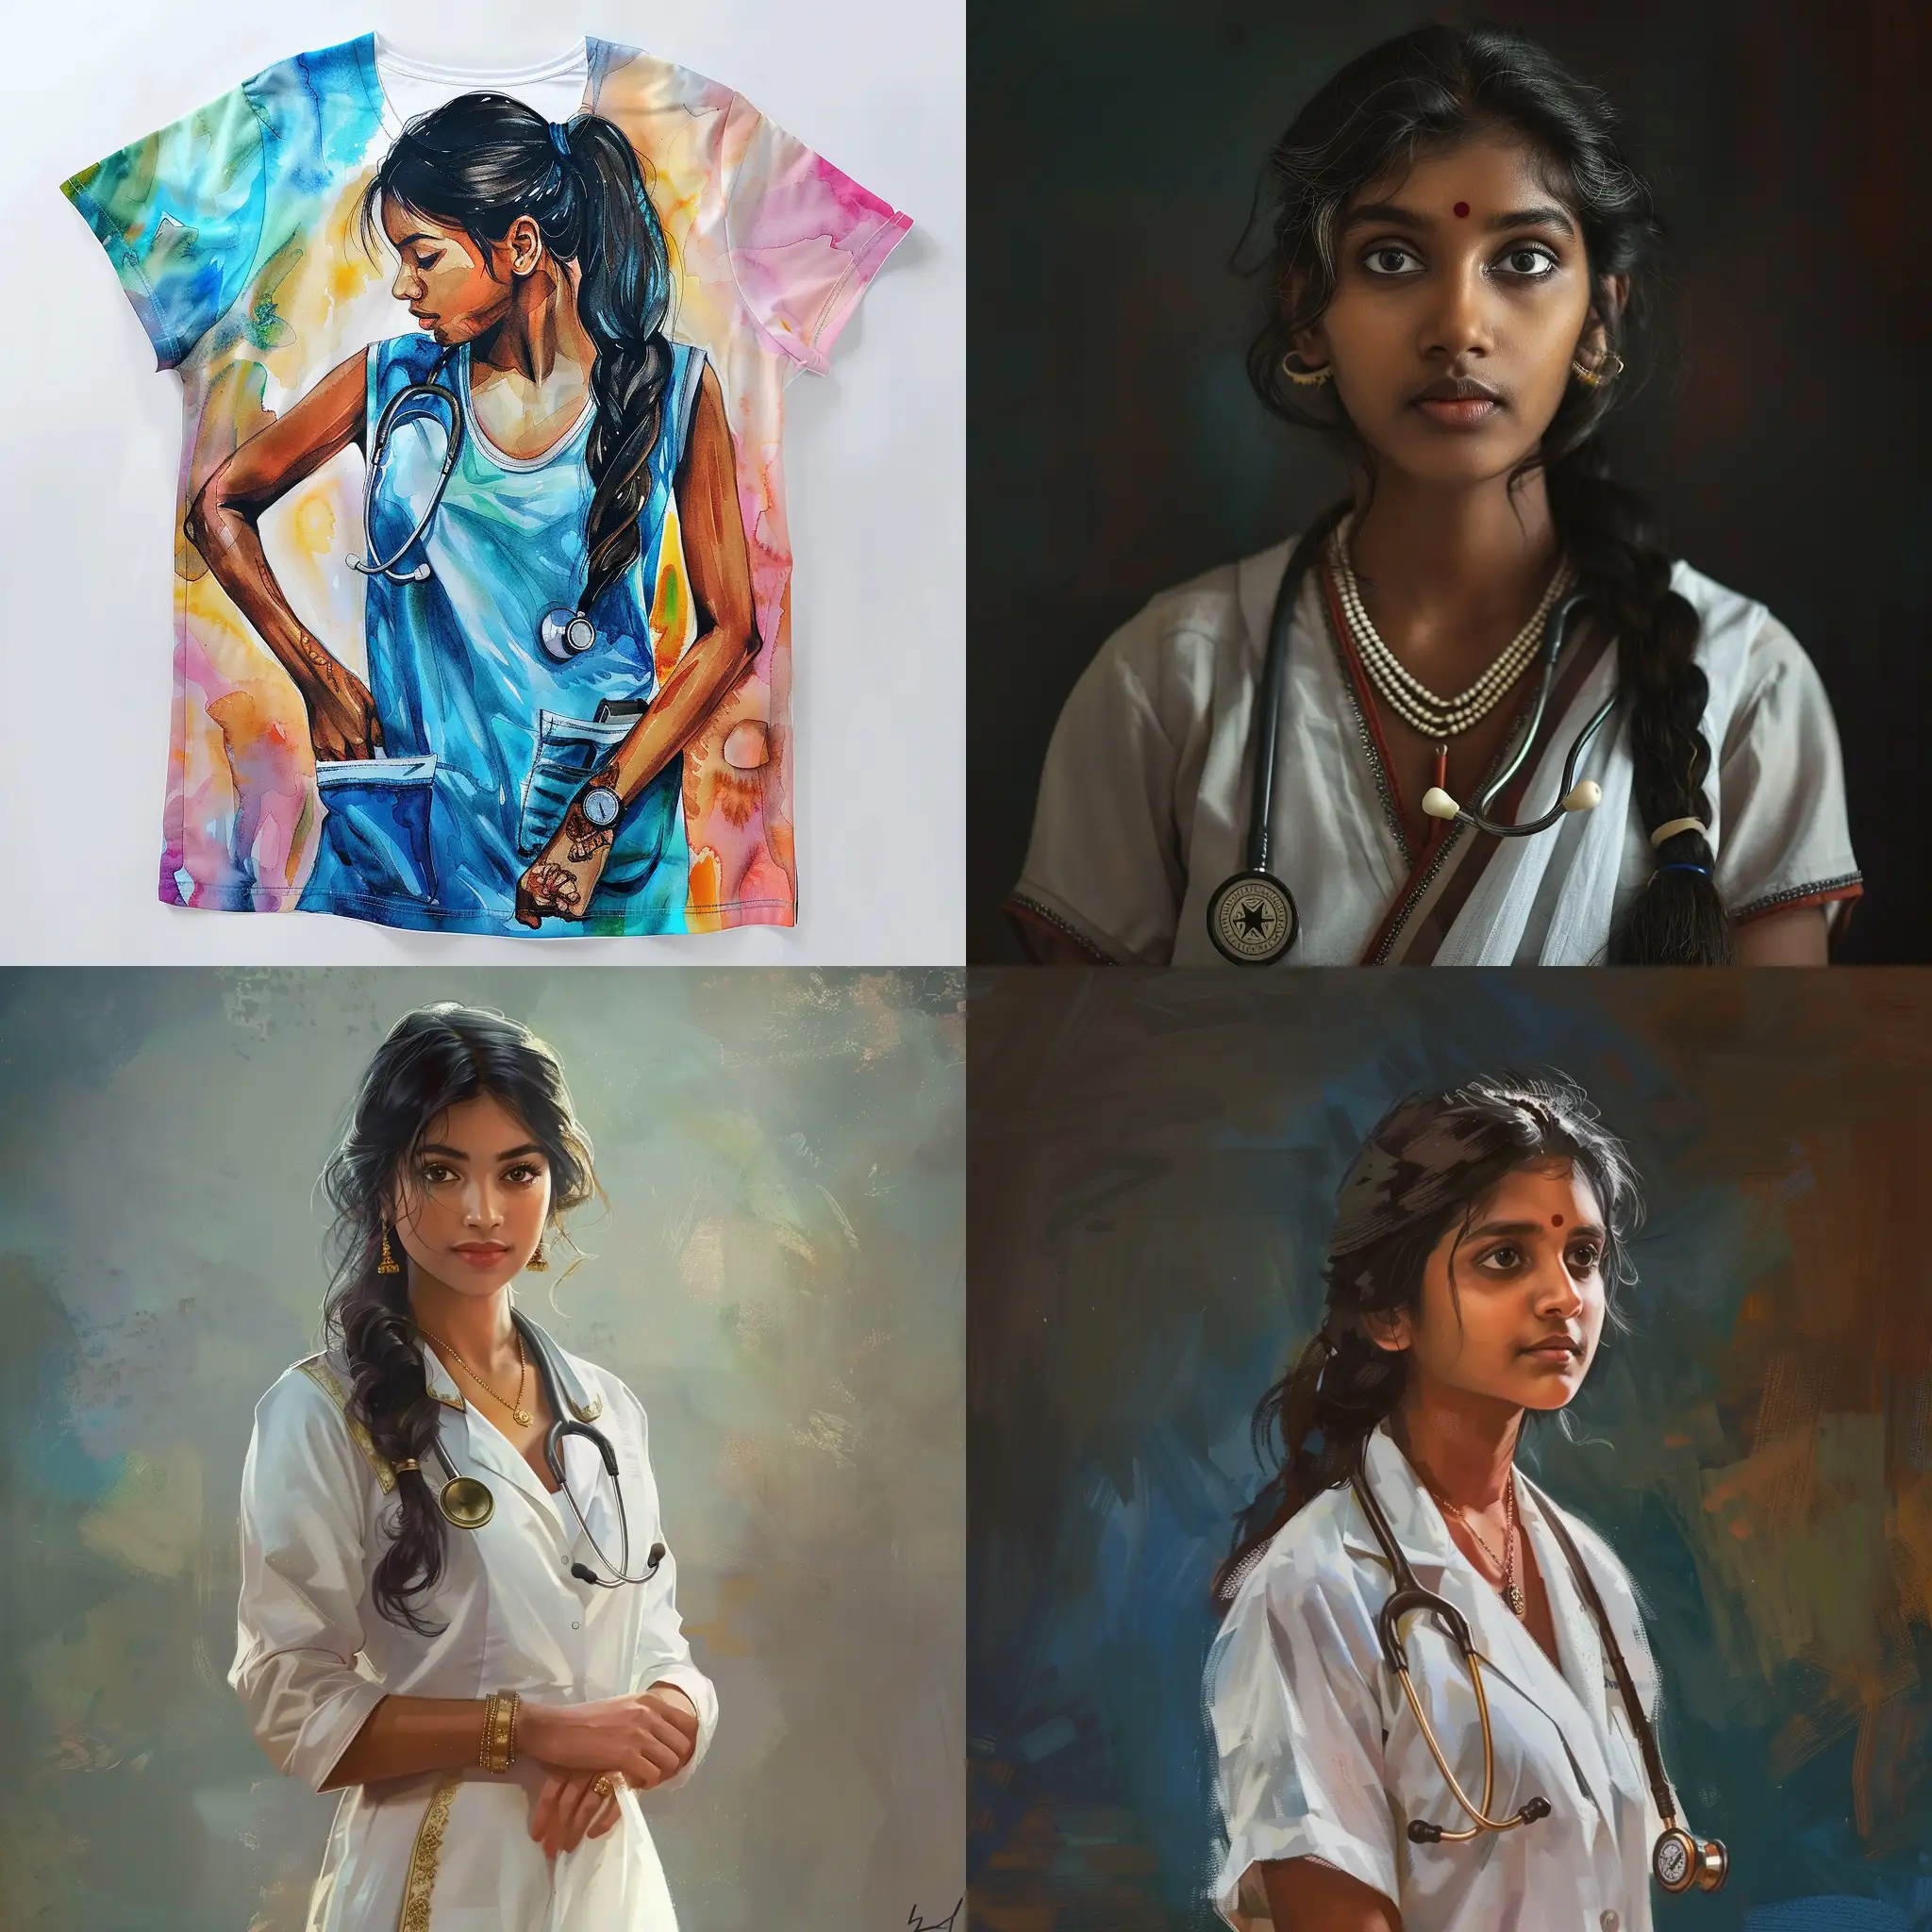 Tamil-Girl-Doctor-Wearing-Sleeveless-Scrubs